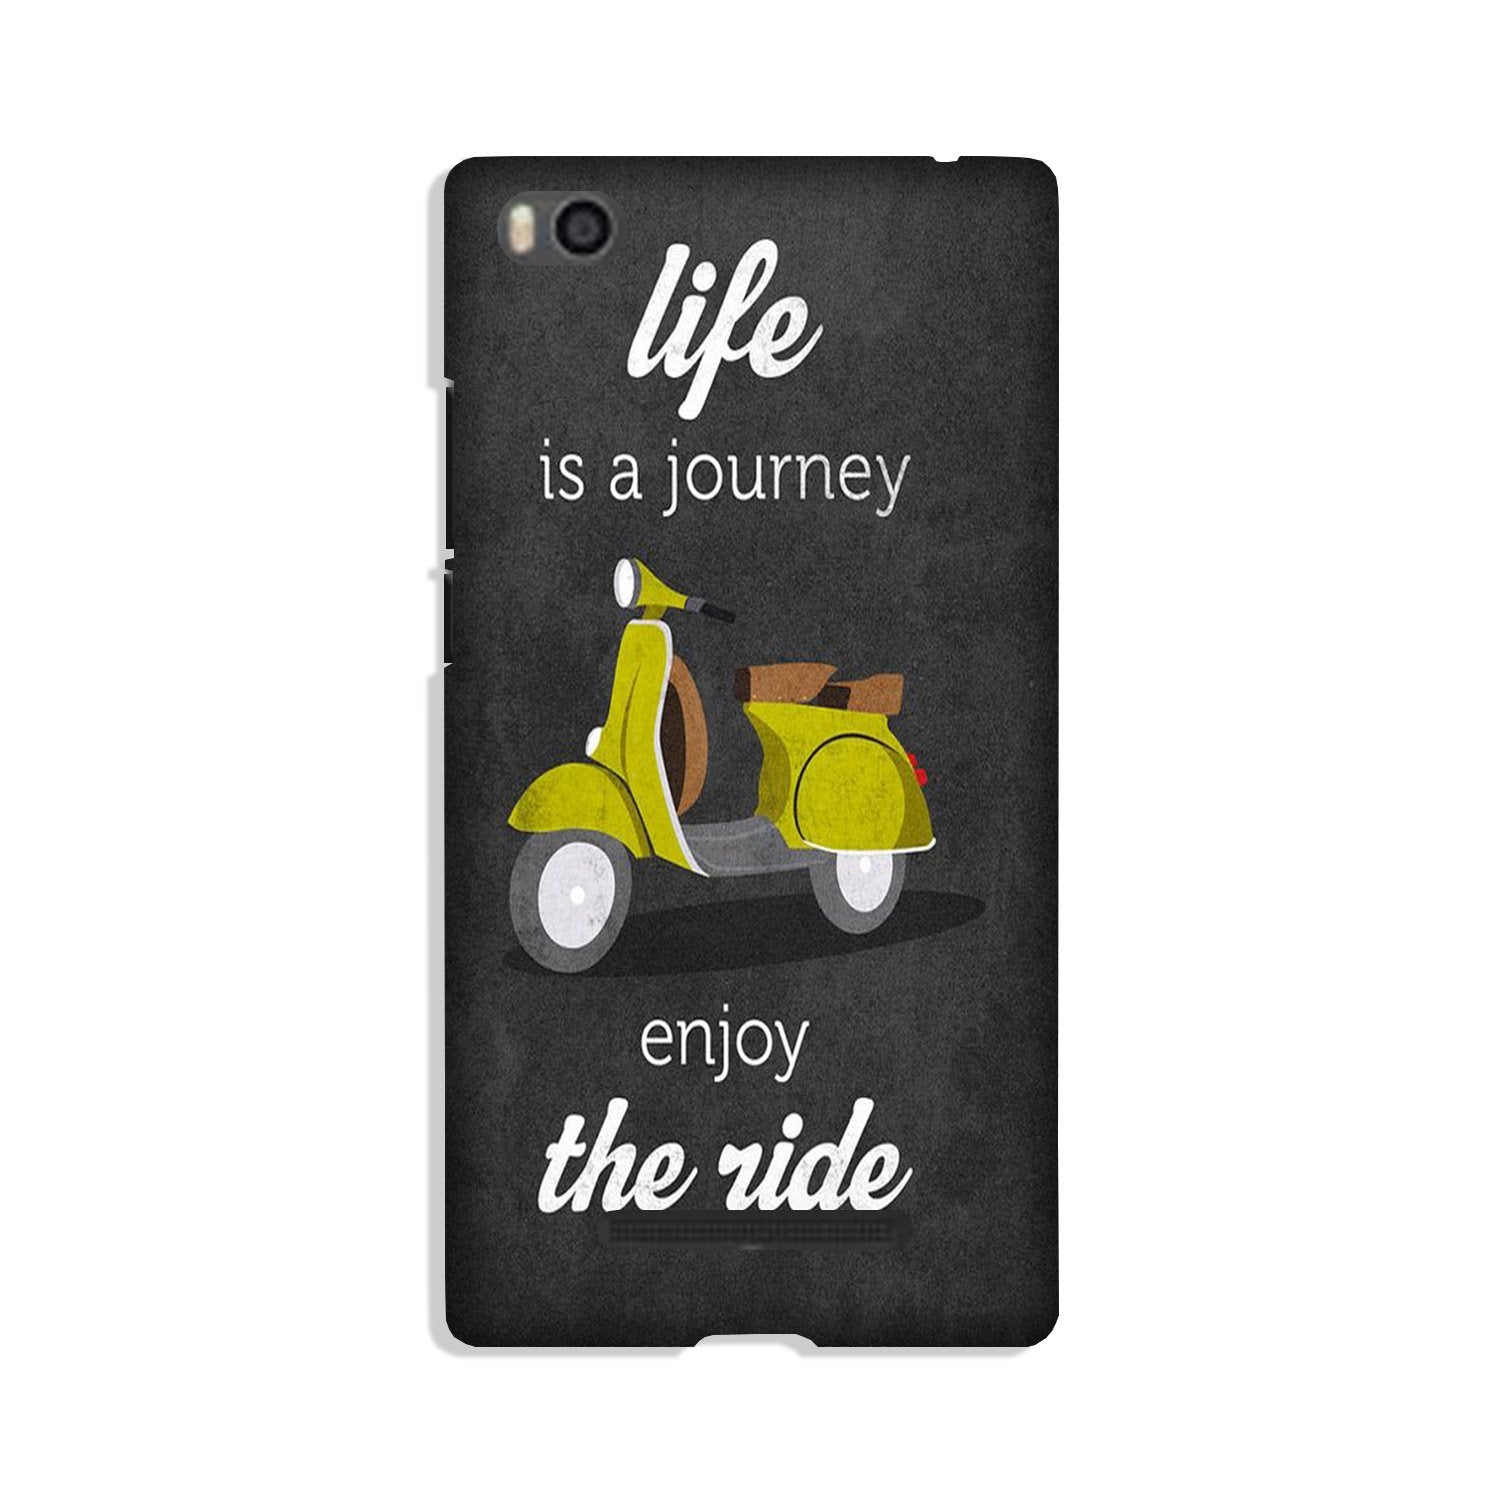 Life is a Journey Case for Xiaomi Mi 4i (Design No. 261)